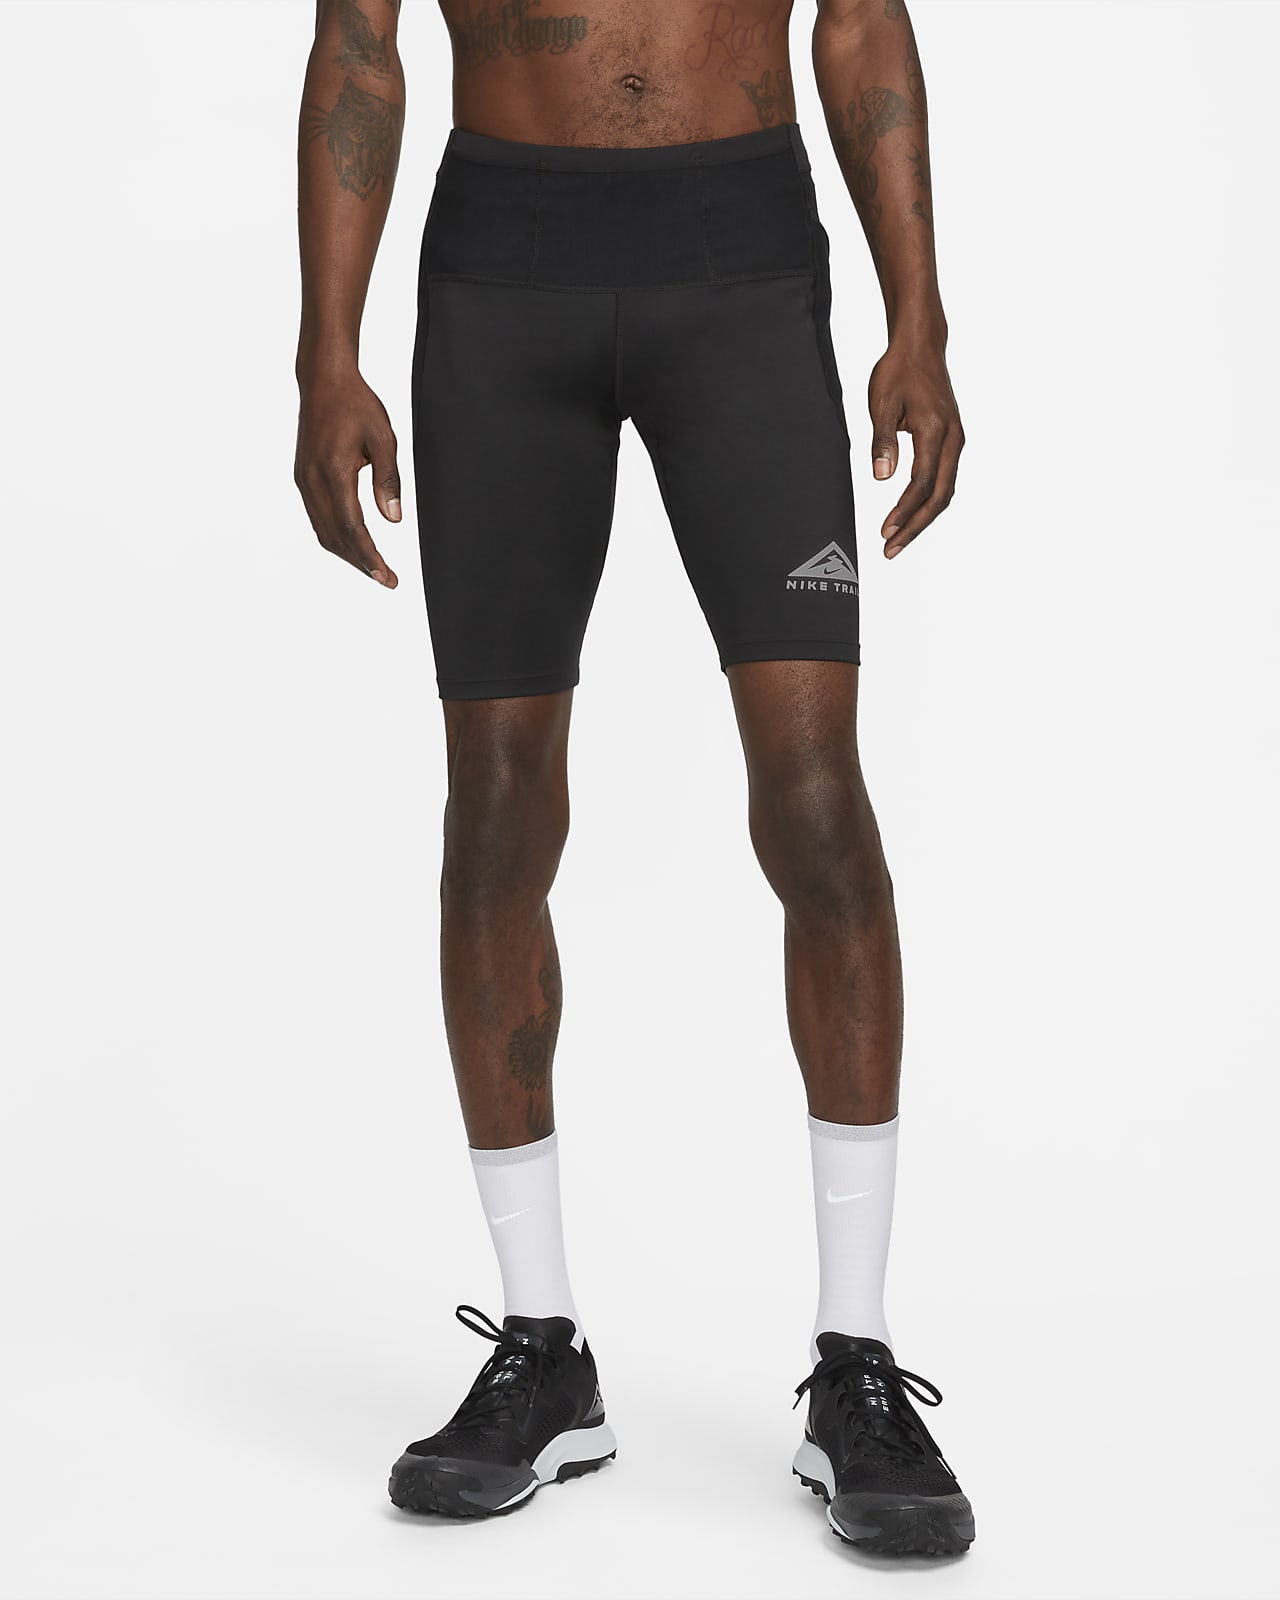 Compression Shorts & Tights. Nike NL